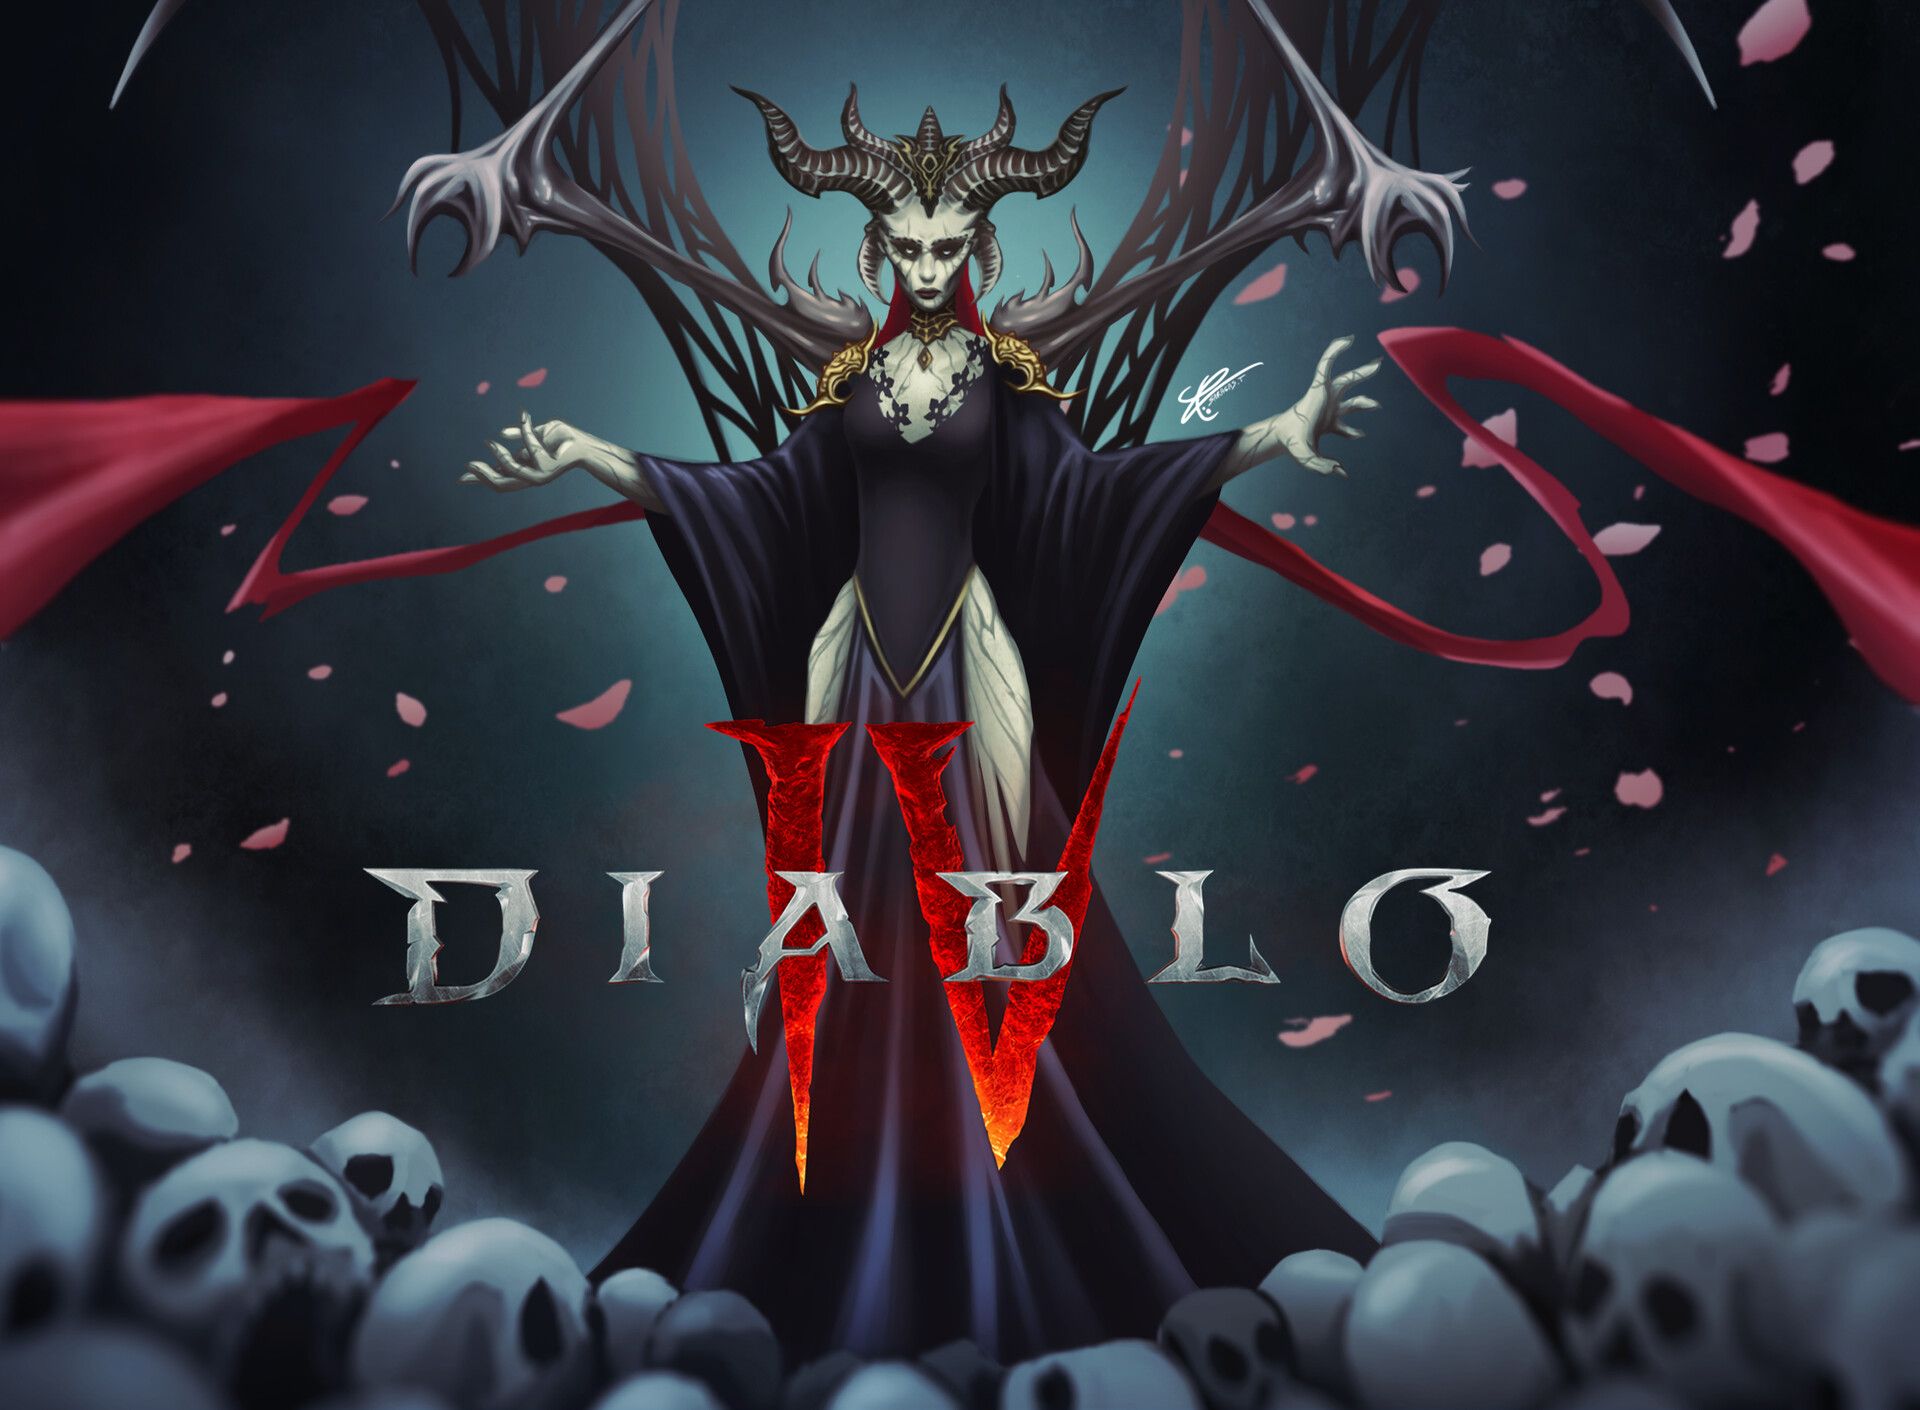 New Wallpaper HD eL Diablo 4 2019 APK for Android Download